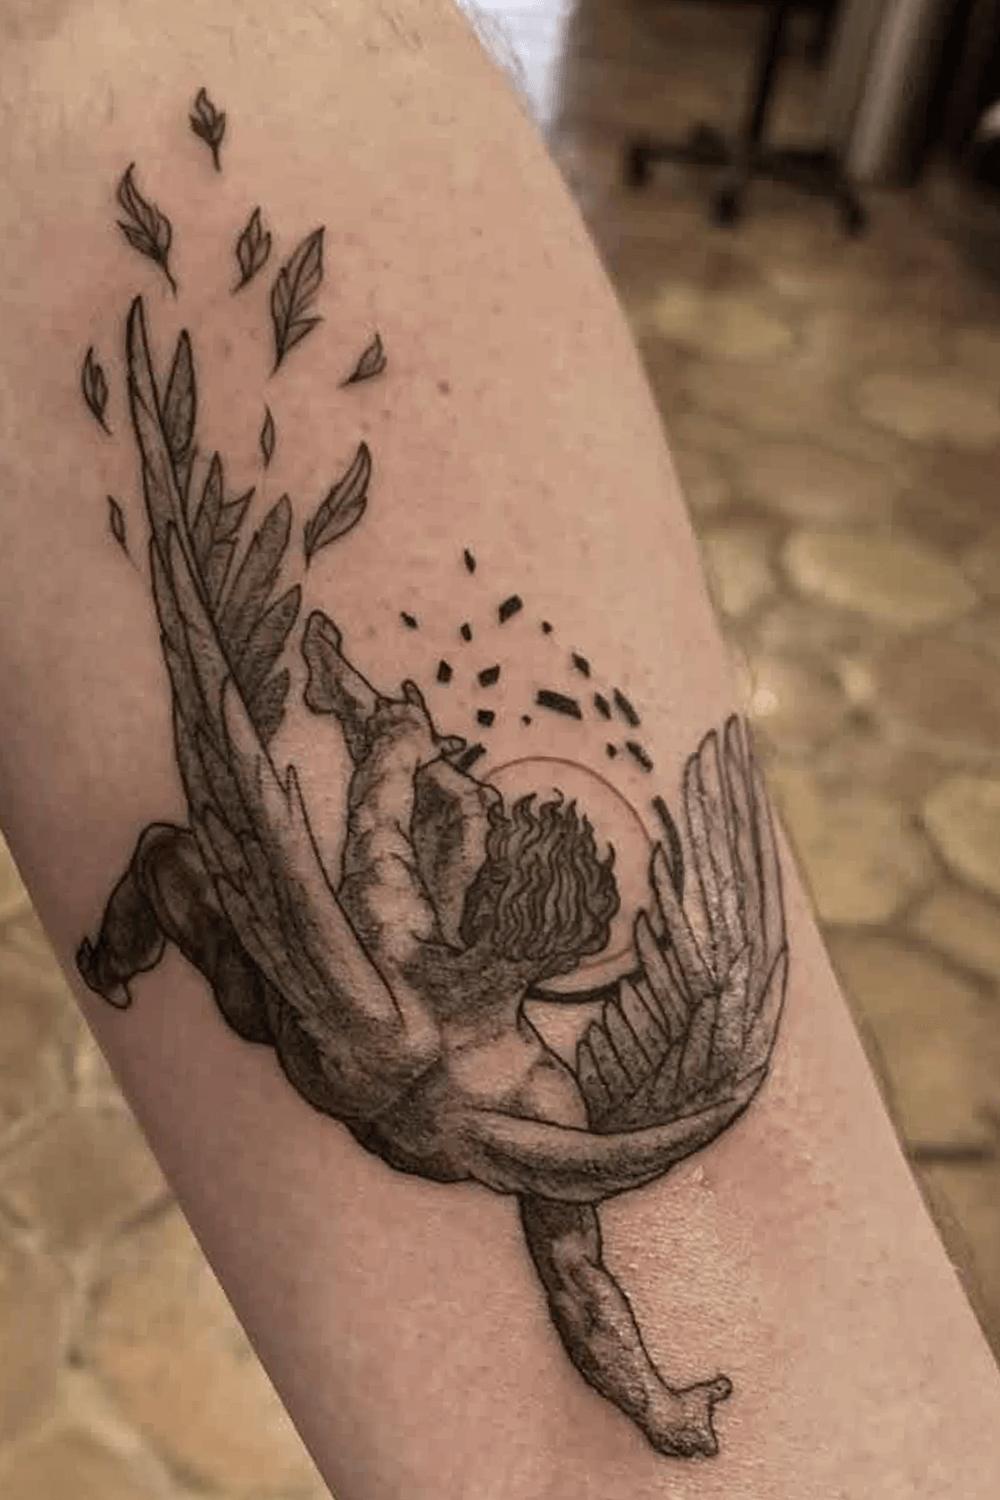 fallen angel tattoo by Sindricfh on DeviantArt